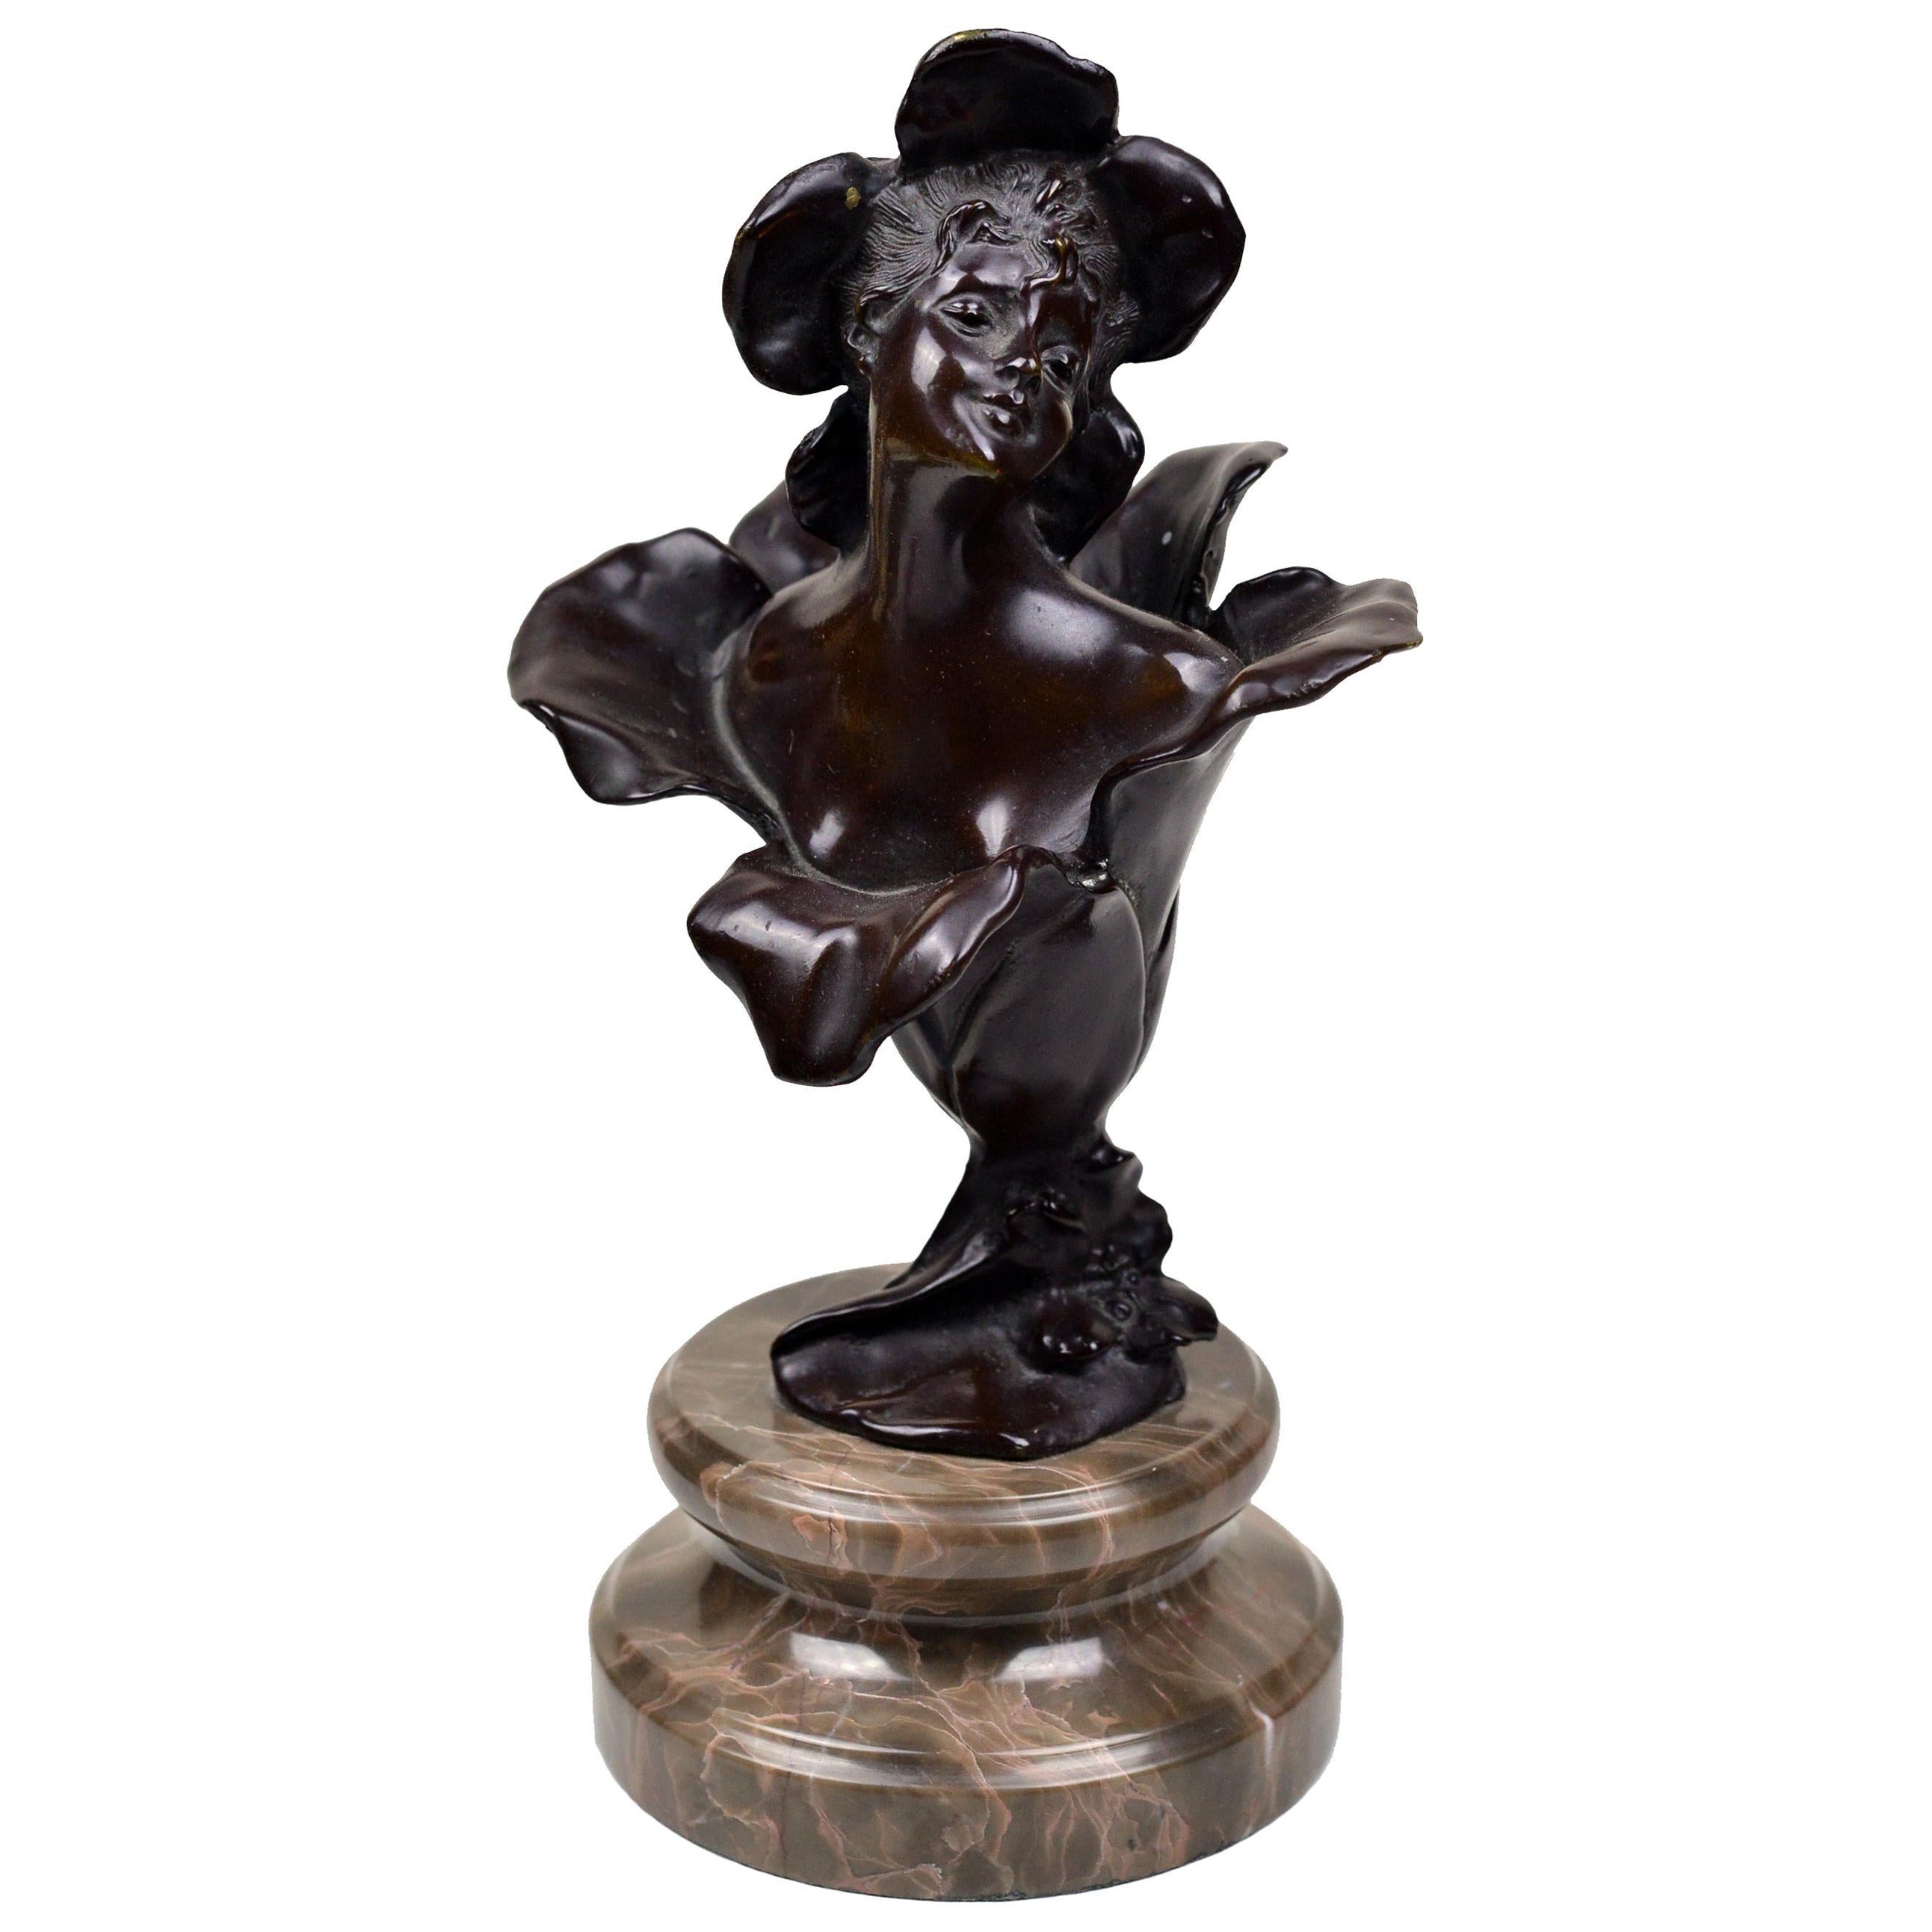 Figurine of Thumbelina Patinated Bronze n Stone Base 19th Century Art Nouveau